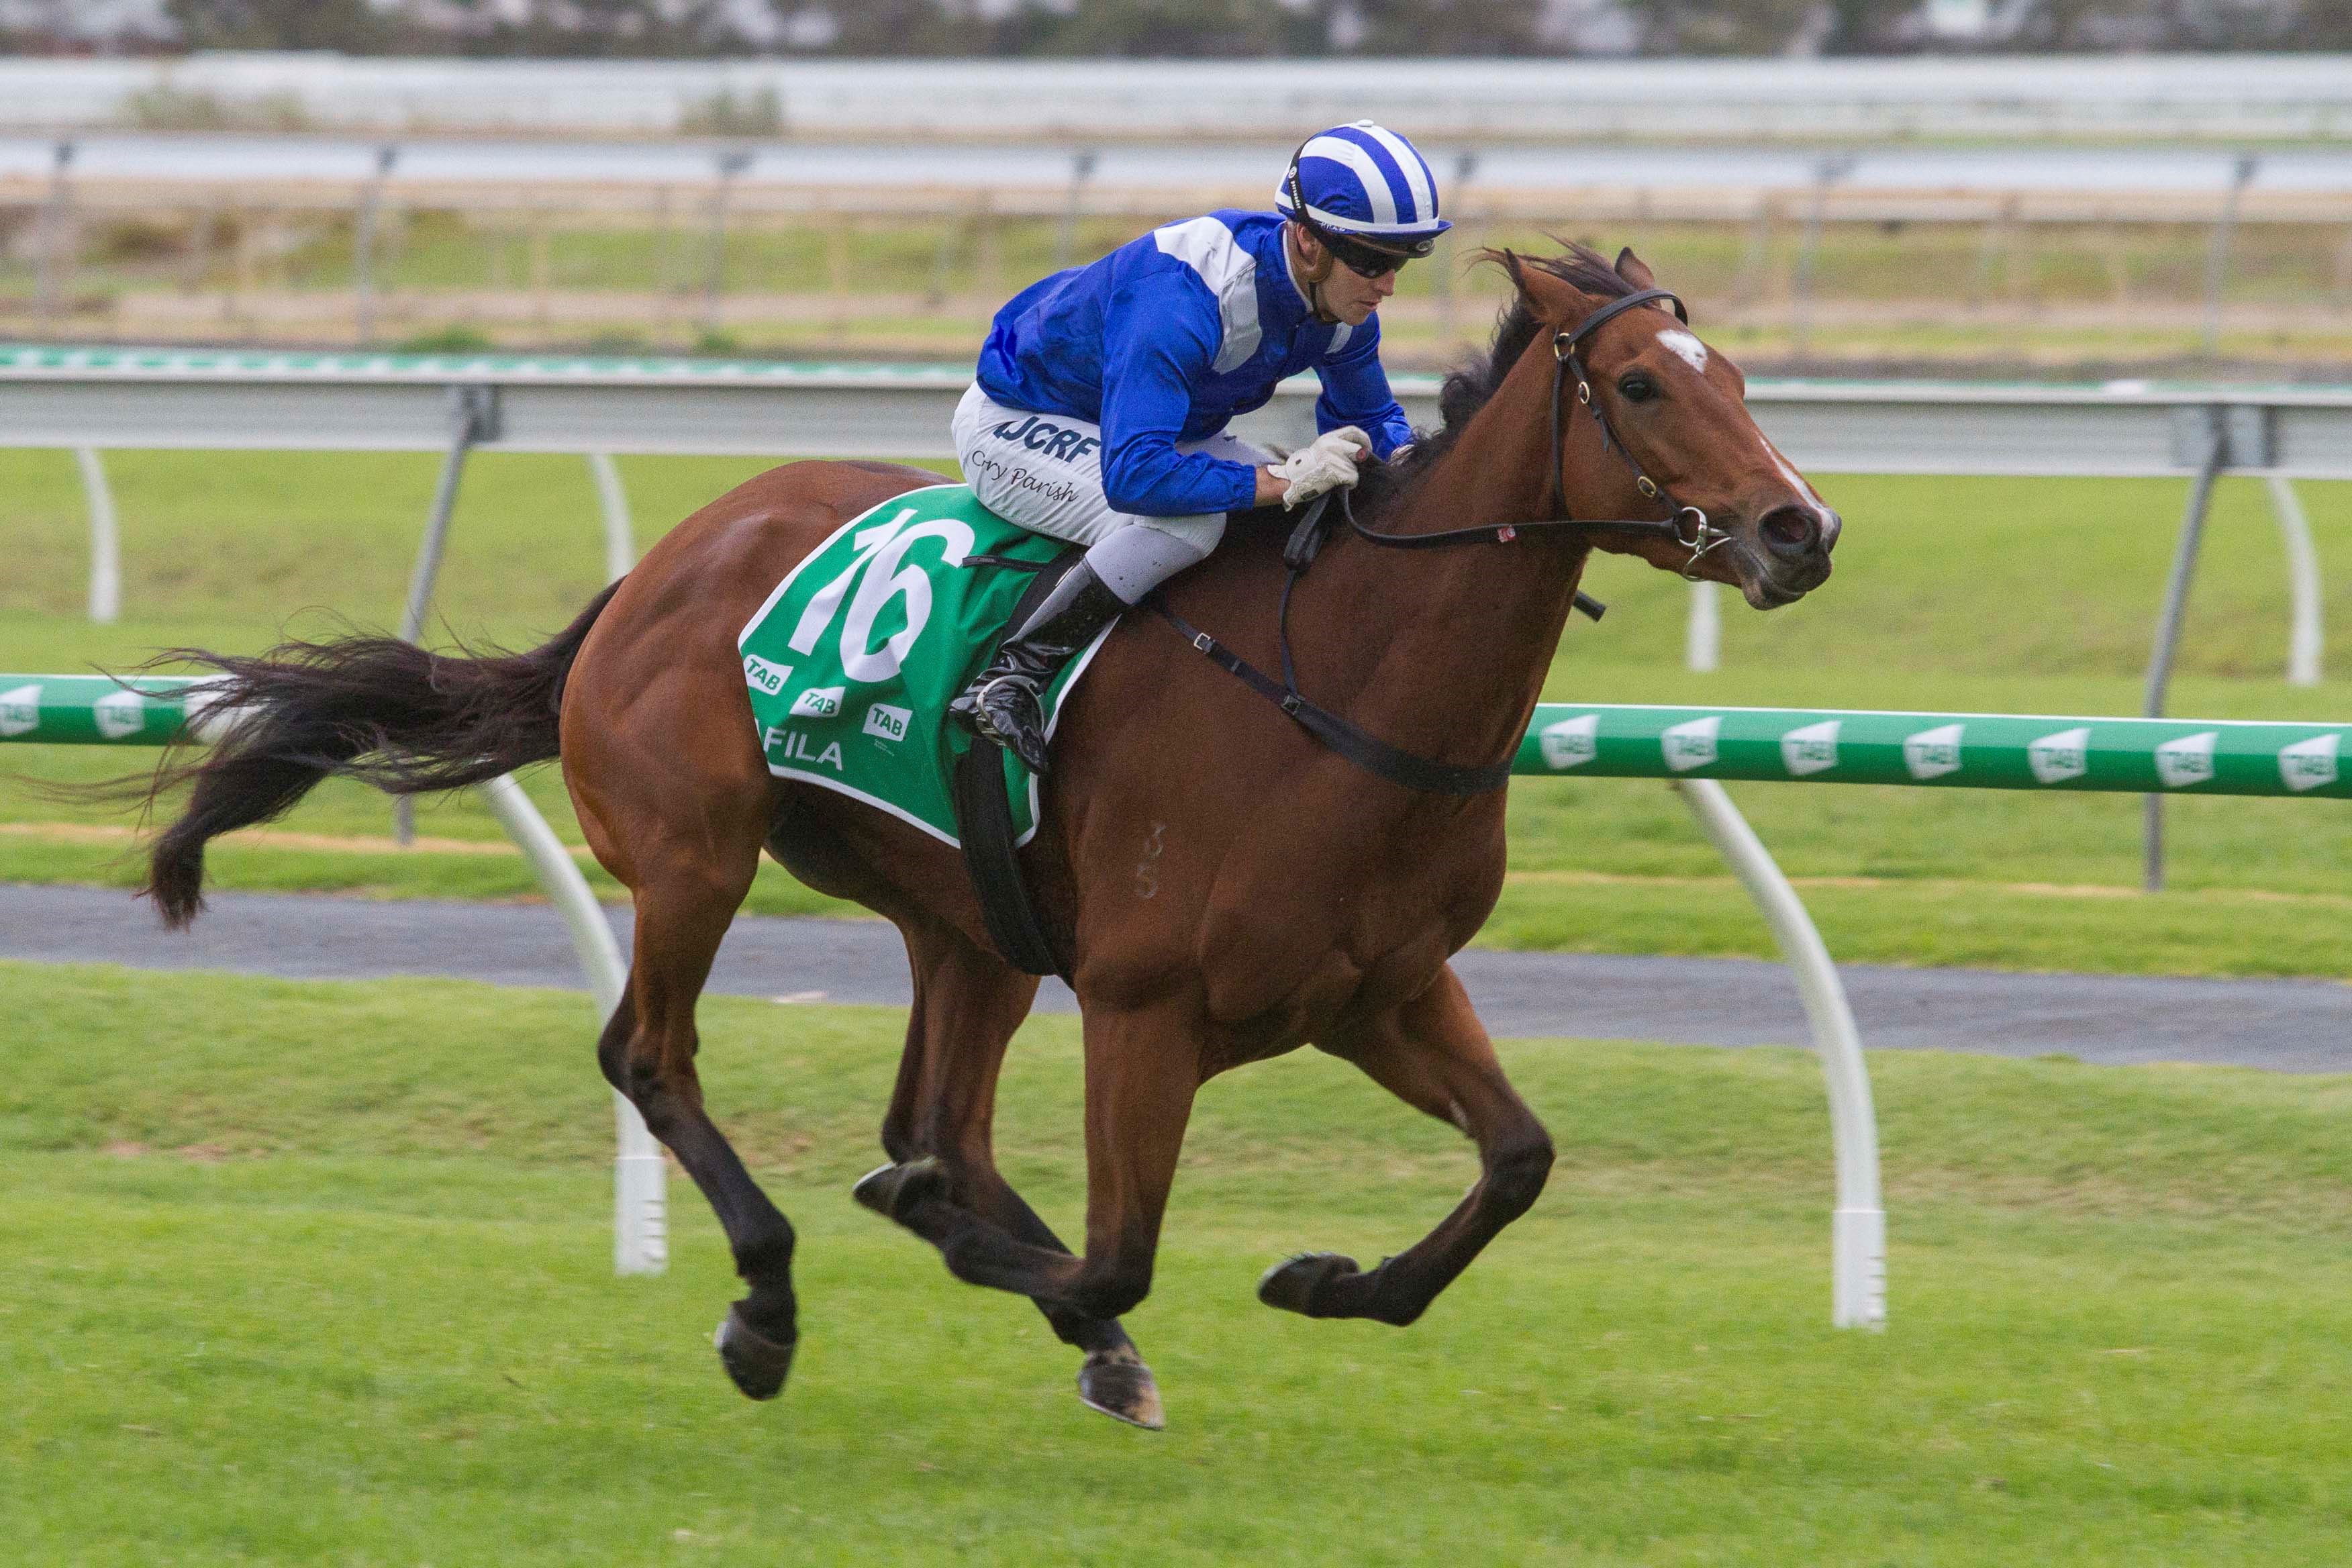 Qafila gallops home to win the TAB South Australian Derby